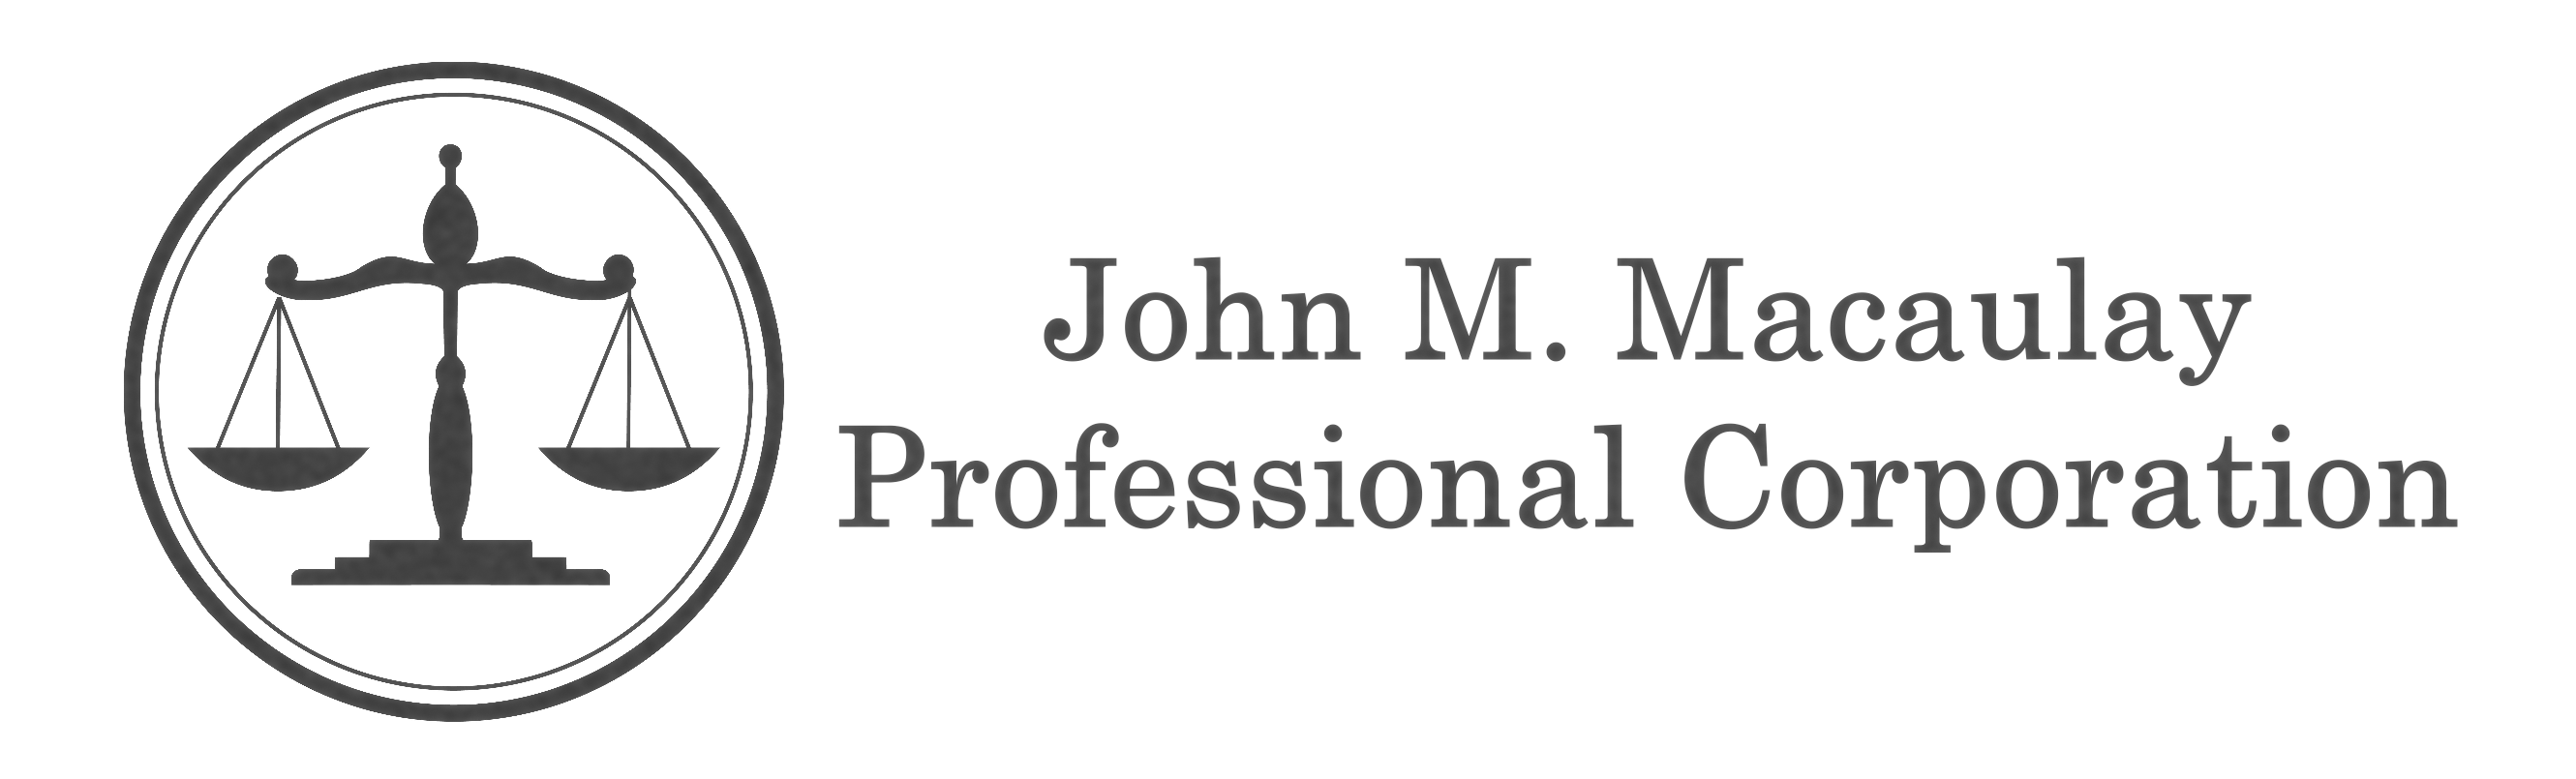 John M. Macaulay Professional Corporation